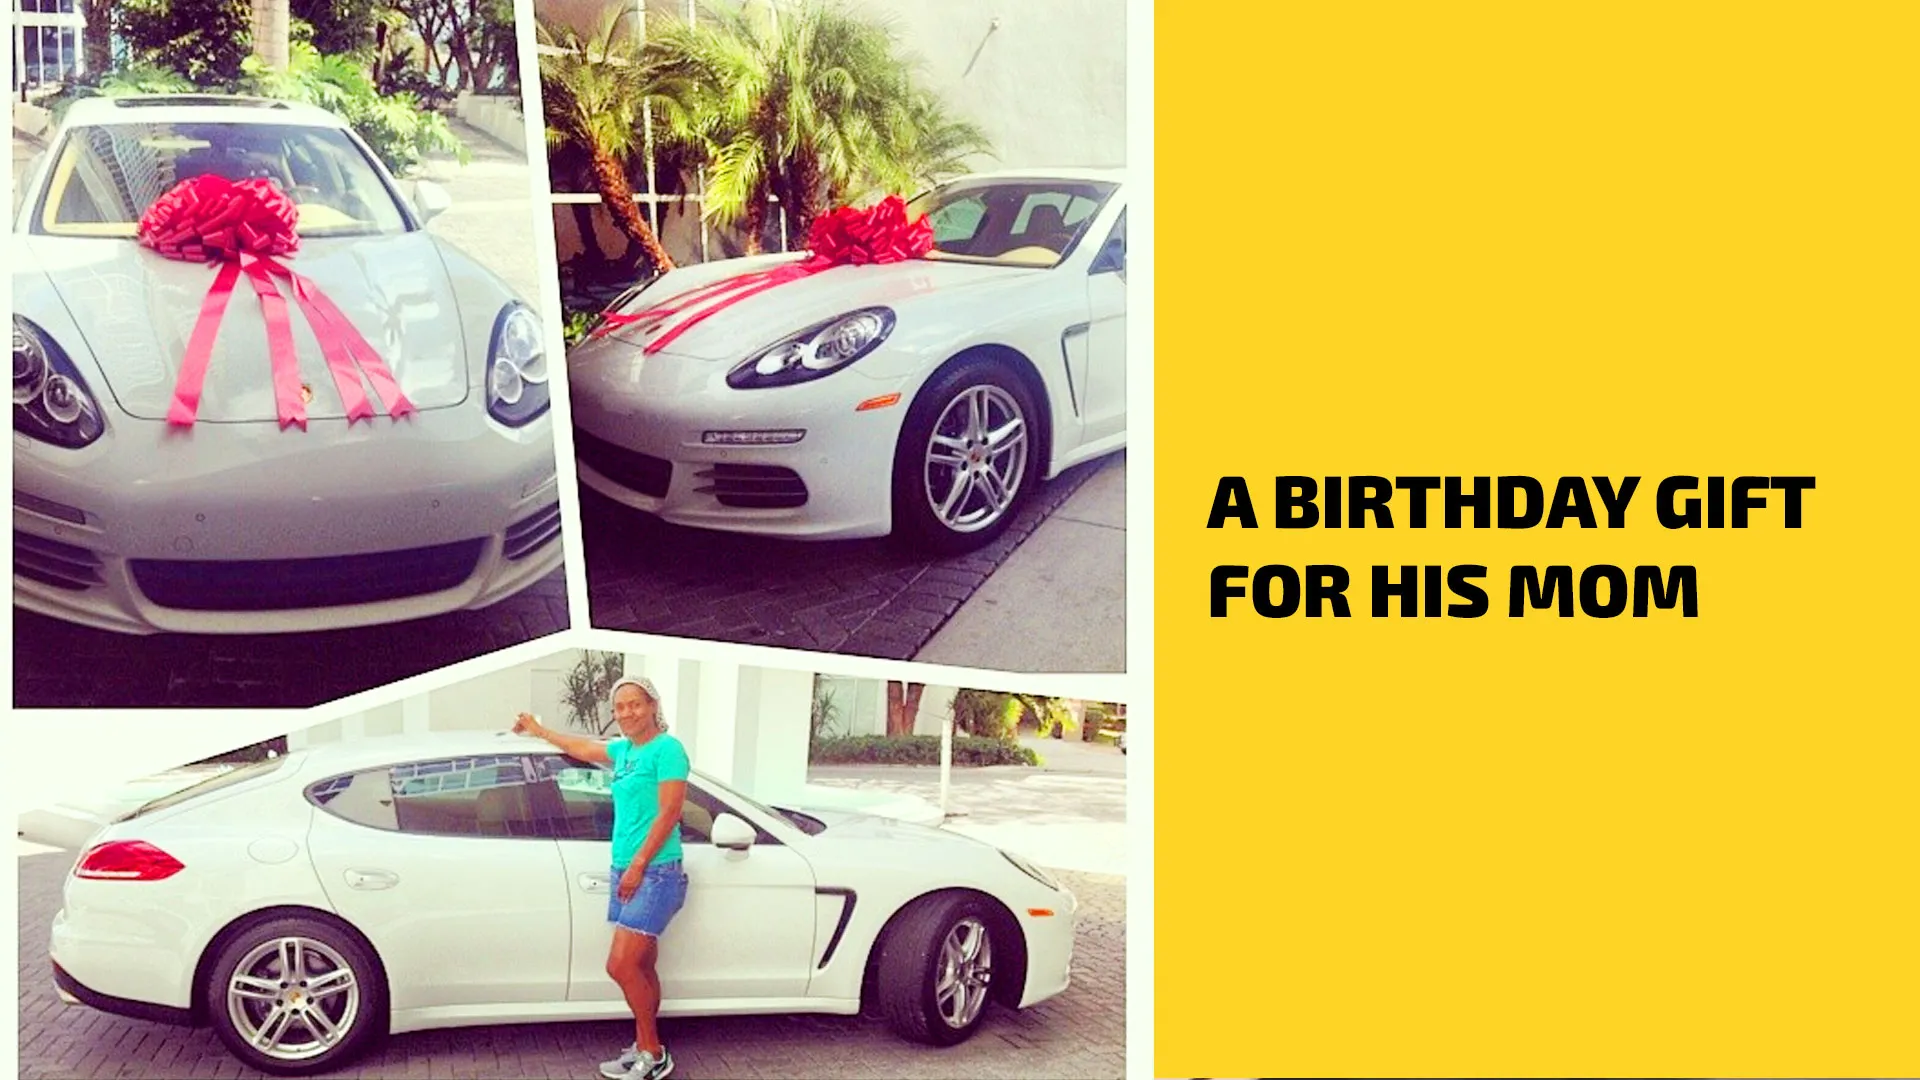 LeBron James’s Porsche Panamera (a birthday gift for his mom)